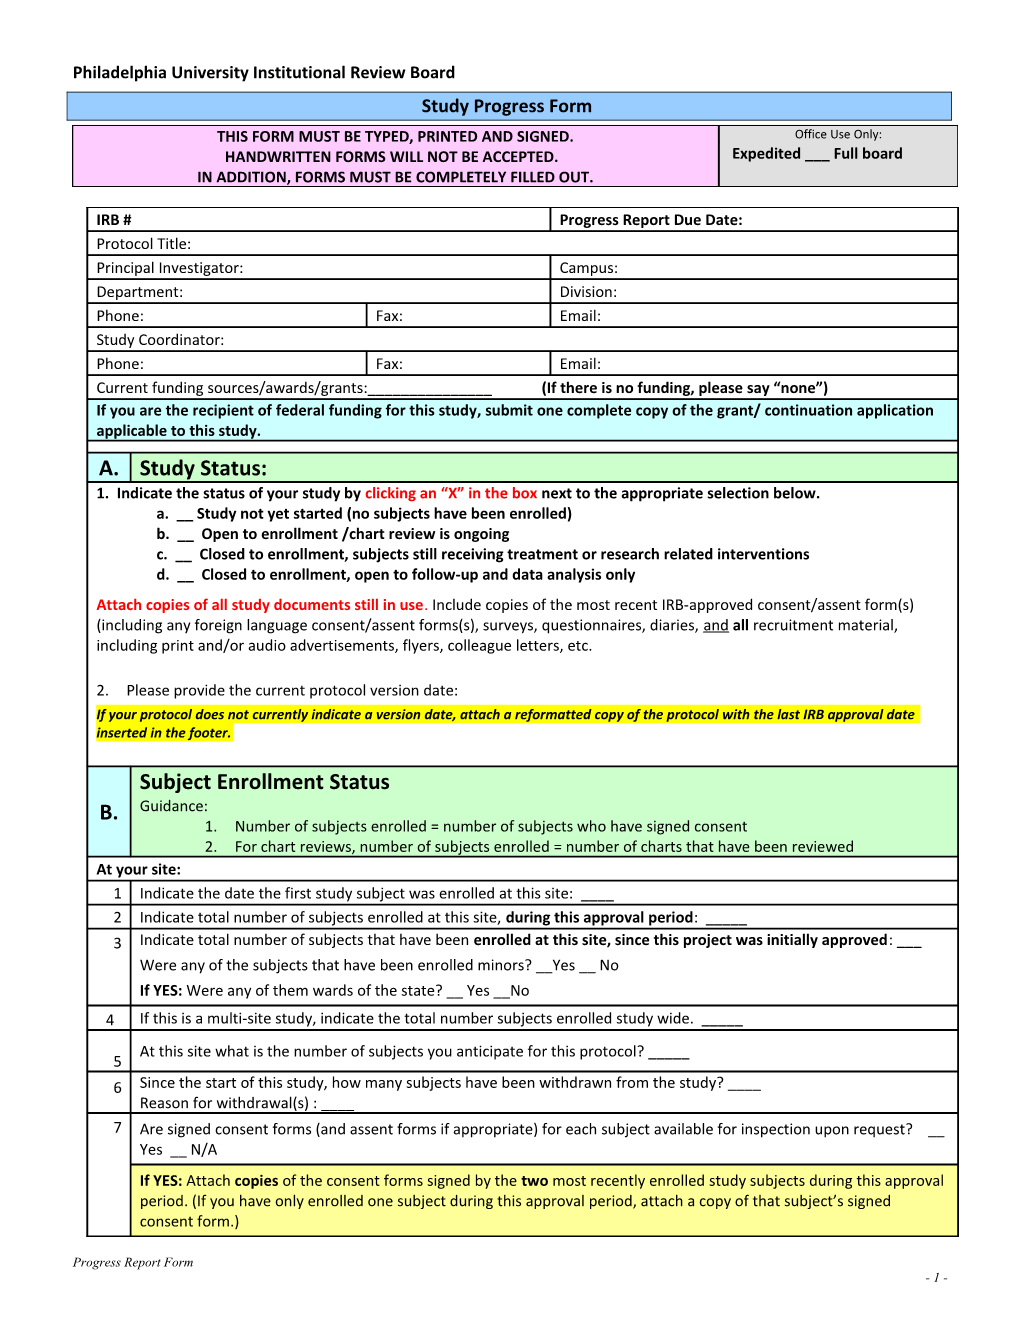 IRB Form 2 - Lay Summary